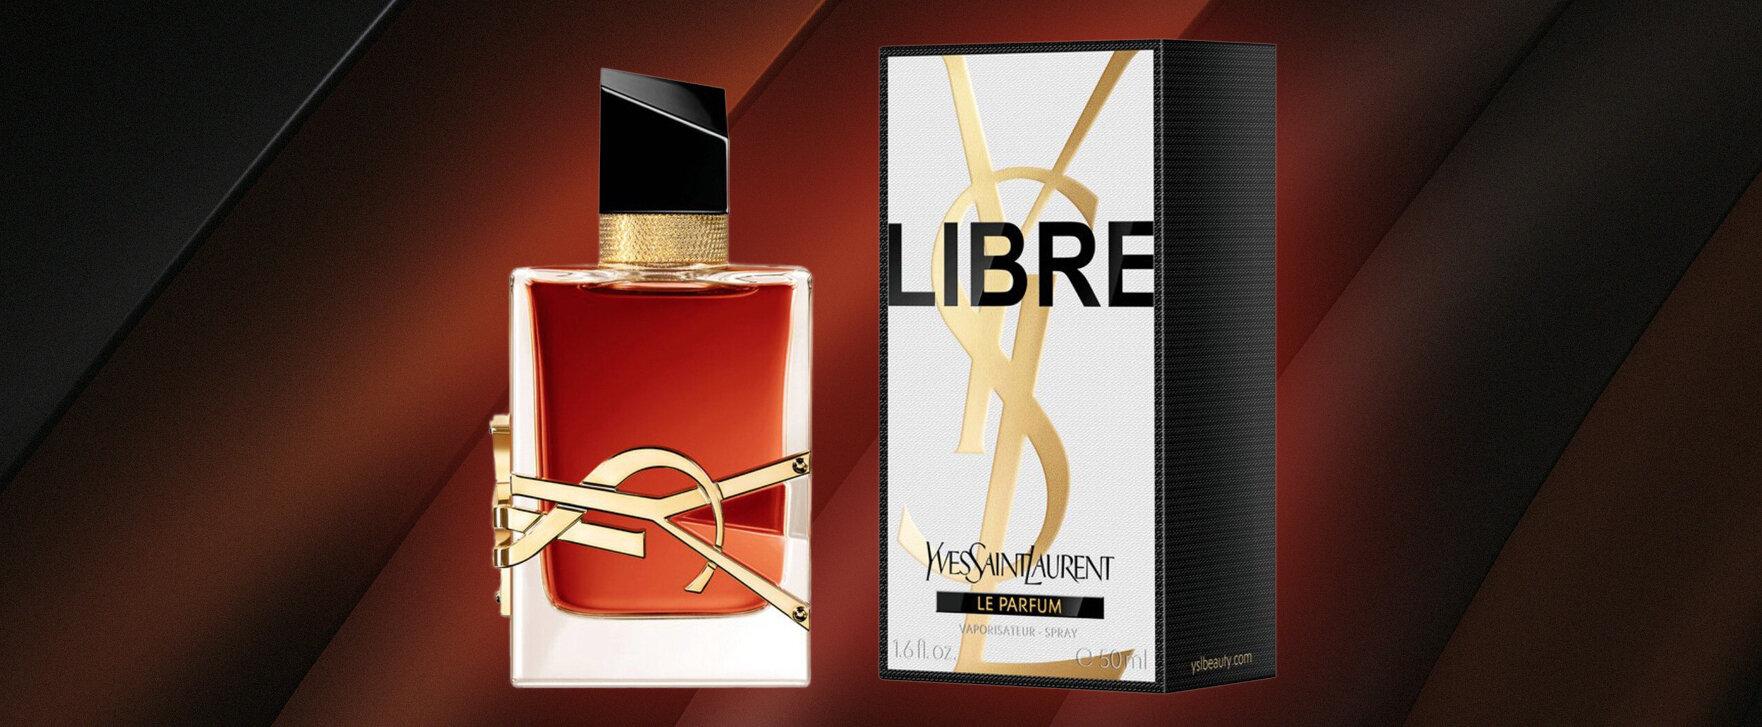 Legendary Fragrance “Libre” by Yves Saint Laurent Reinterpreted